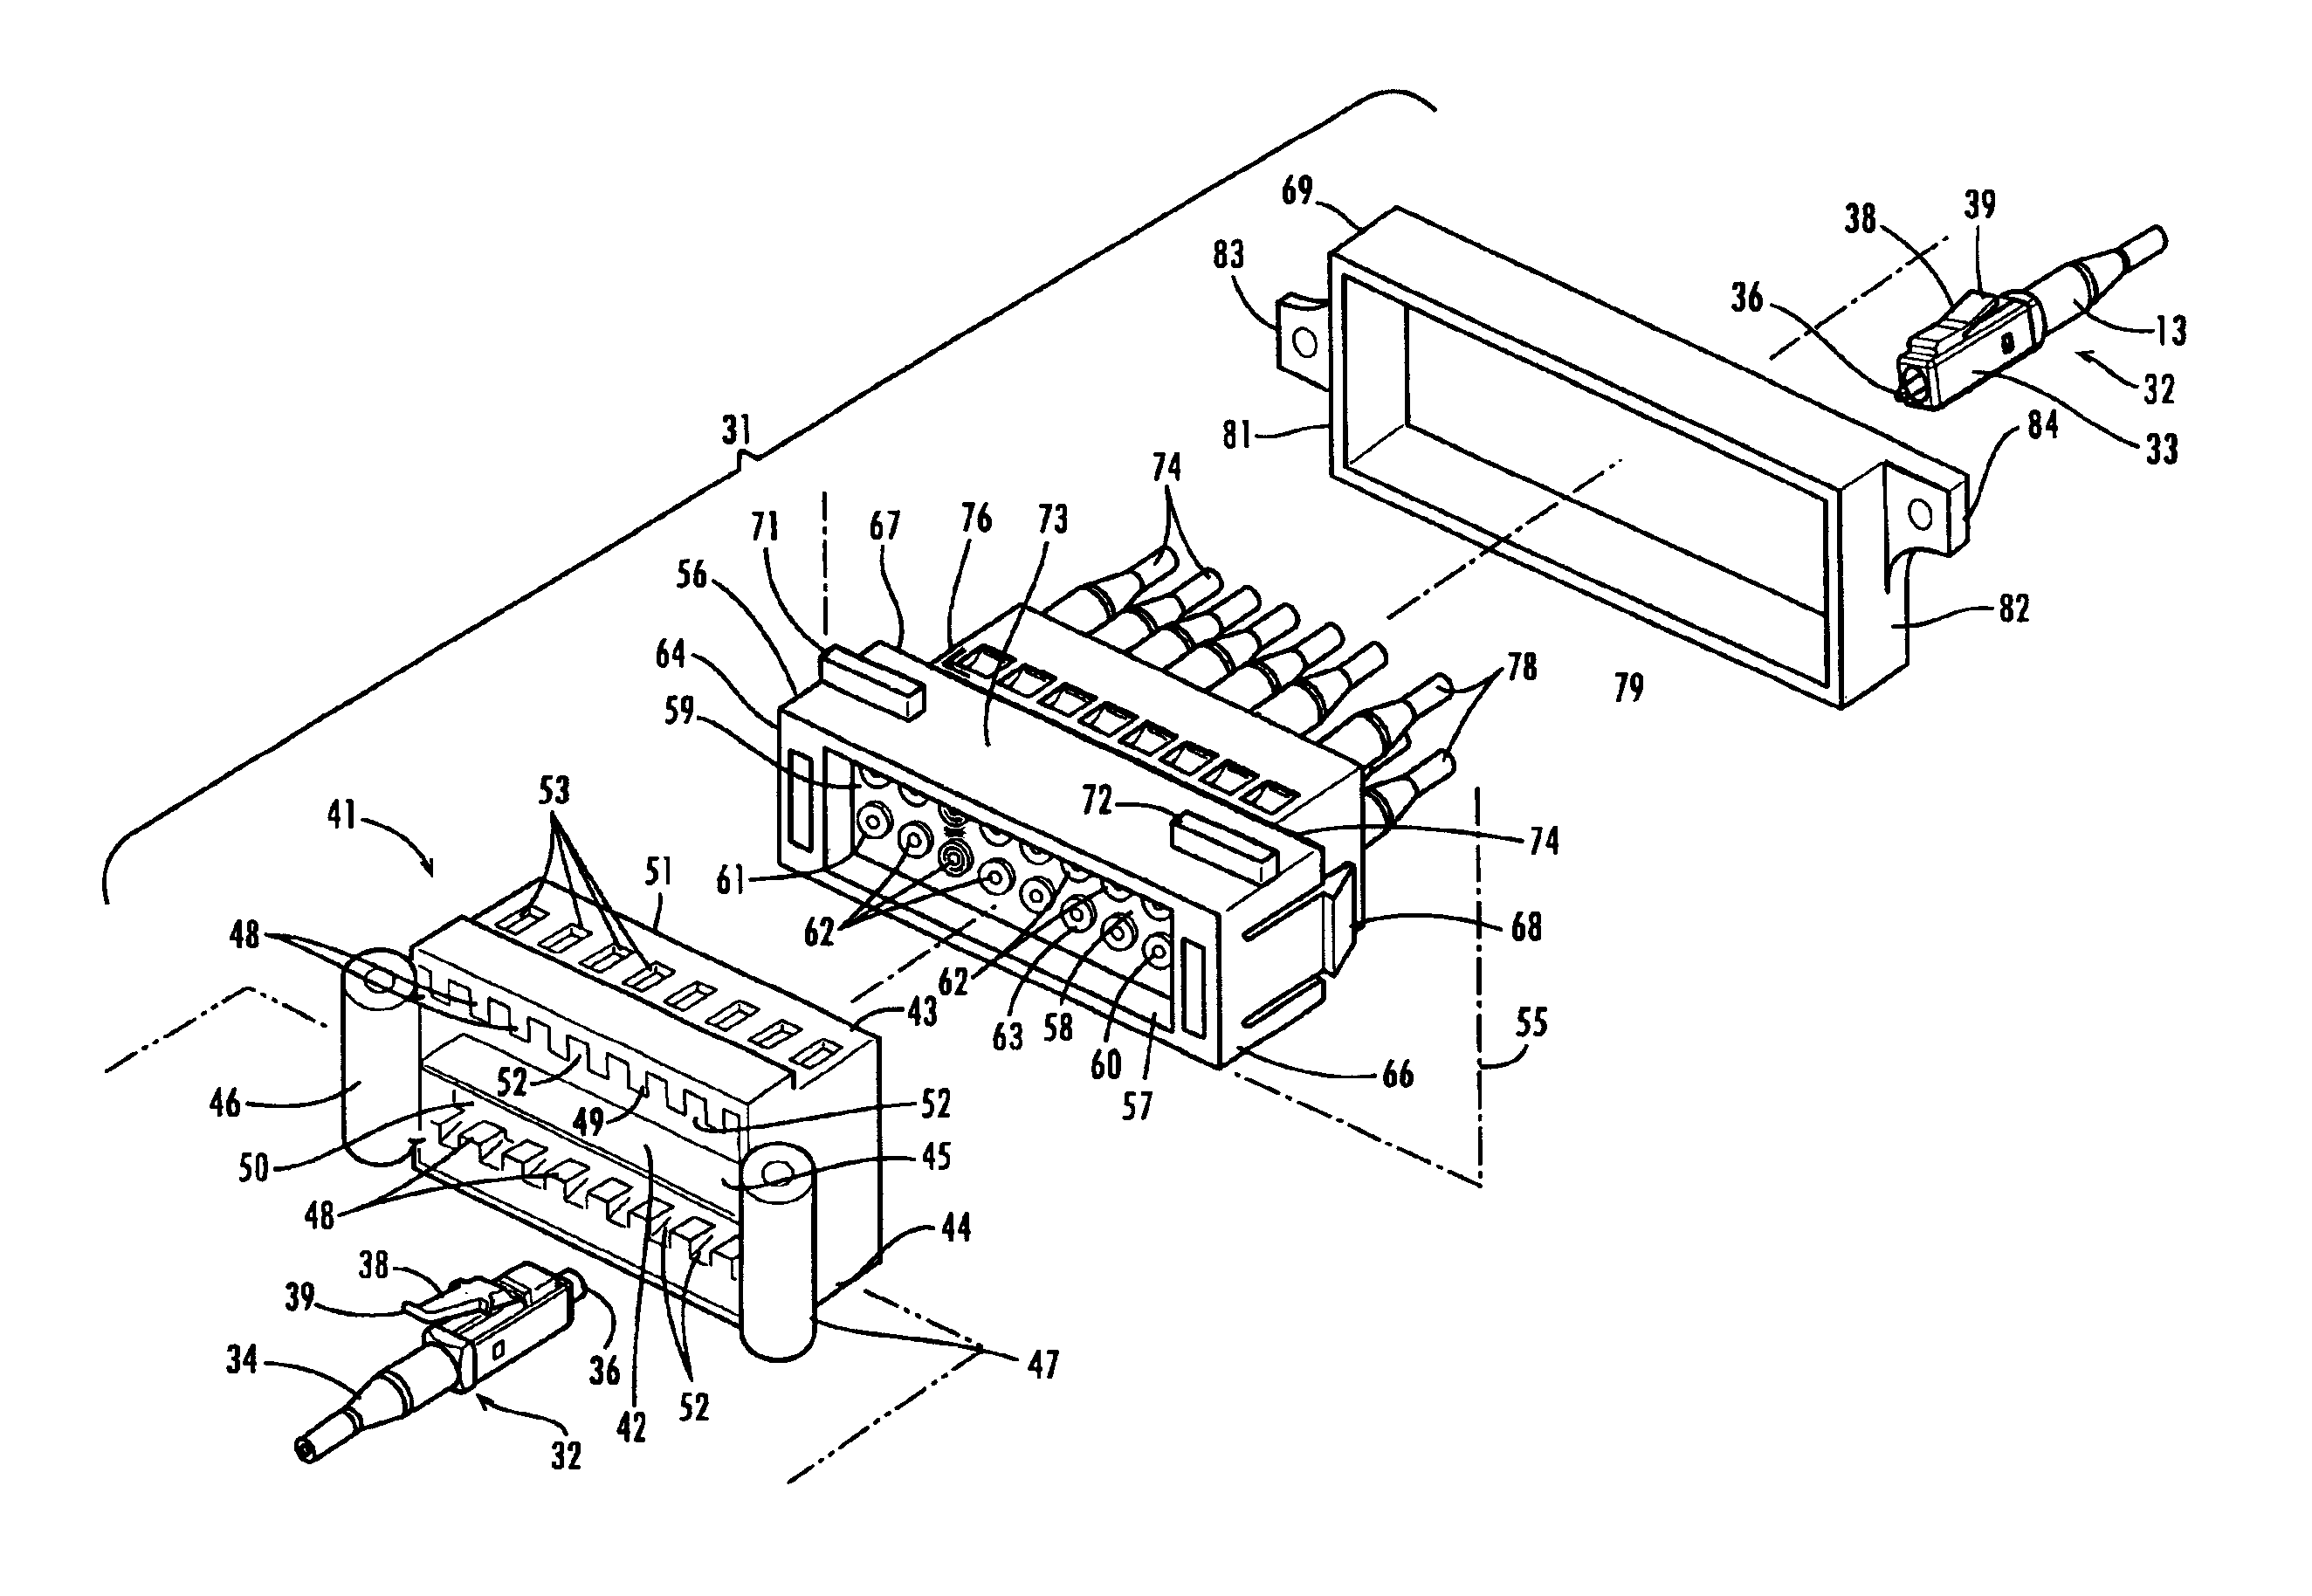 High density modular backplane connector for fiber optics